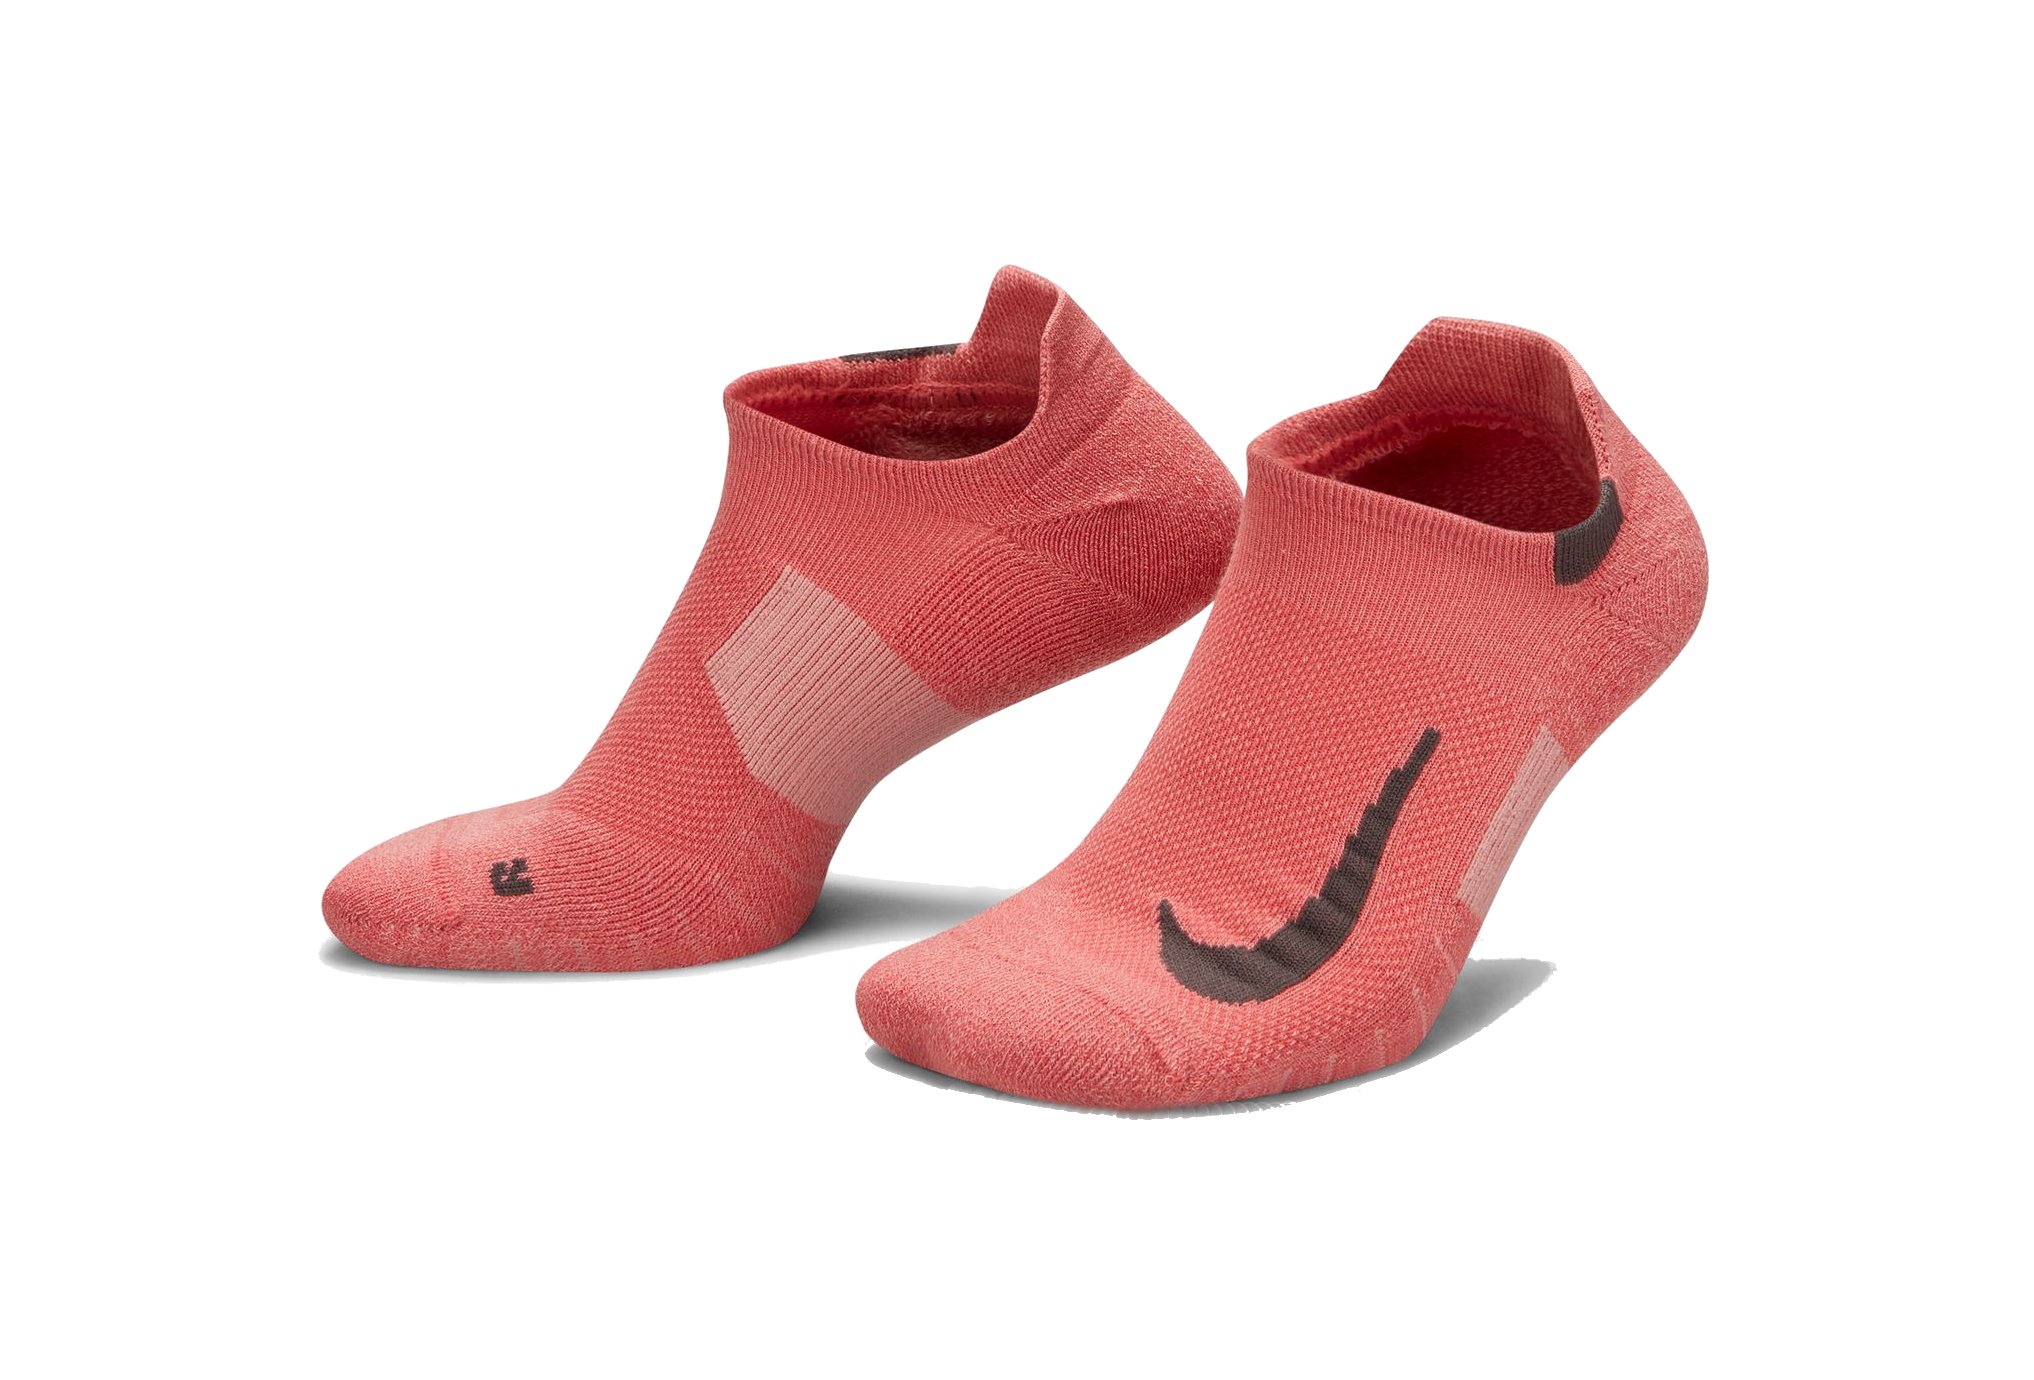 Chaussettes Nike Multiplier - Textile Homme - Running - Activités